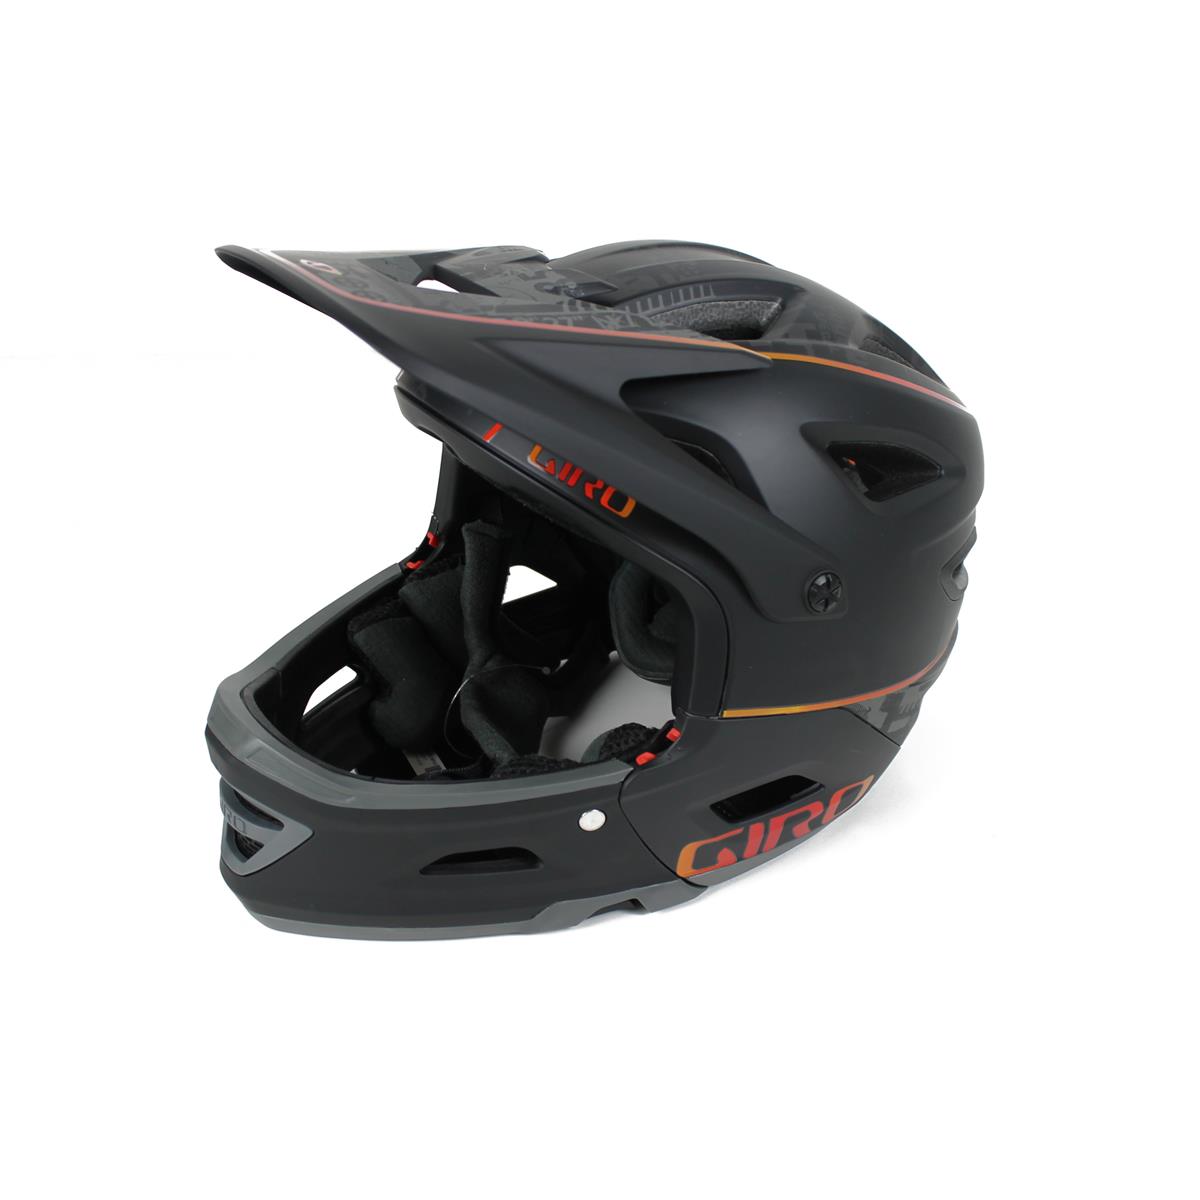 Helmet Switchblade Mips black size M (55-59cm)